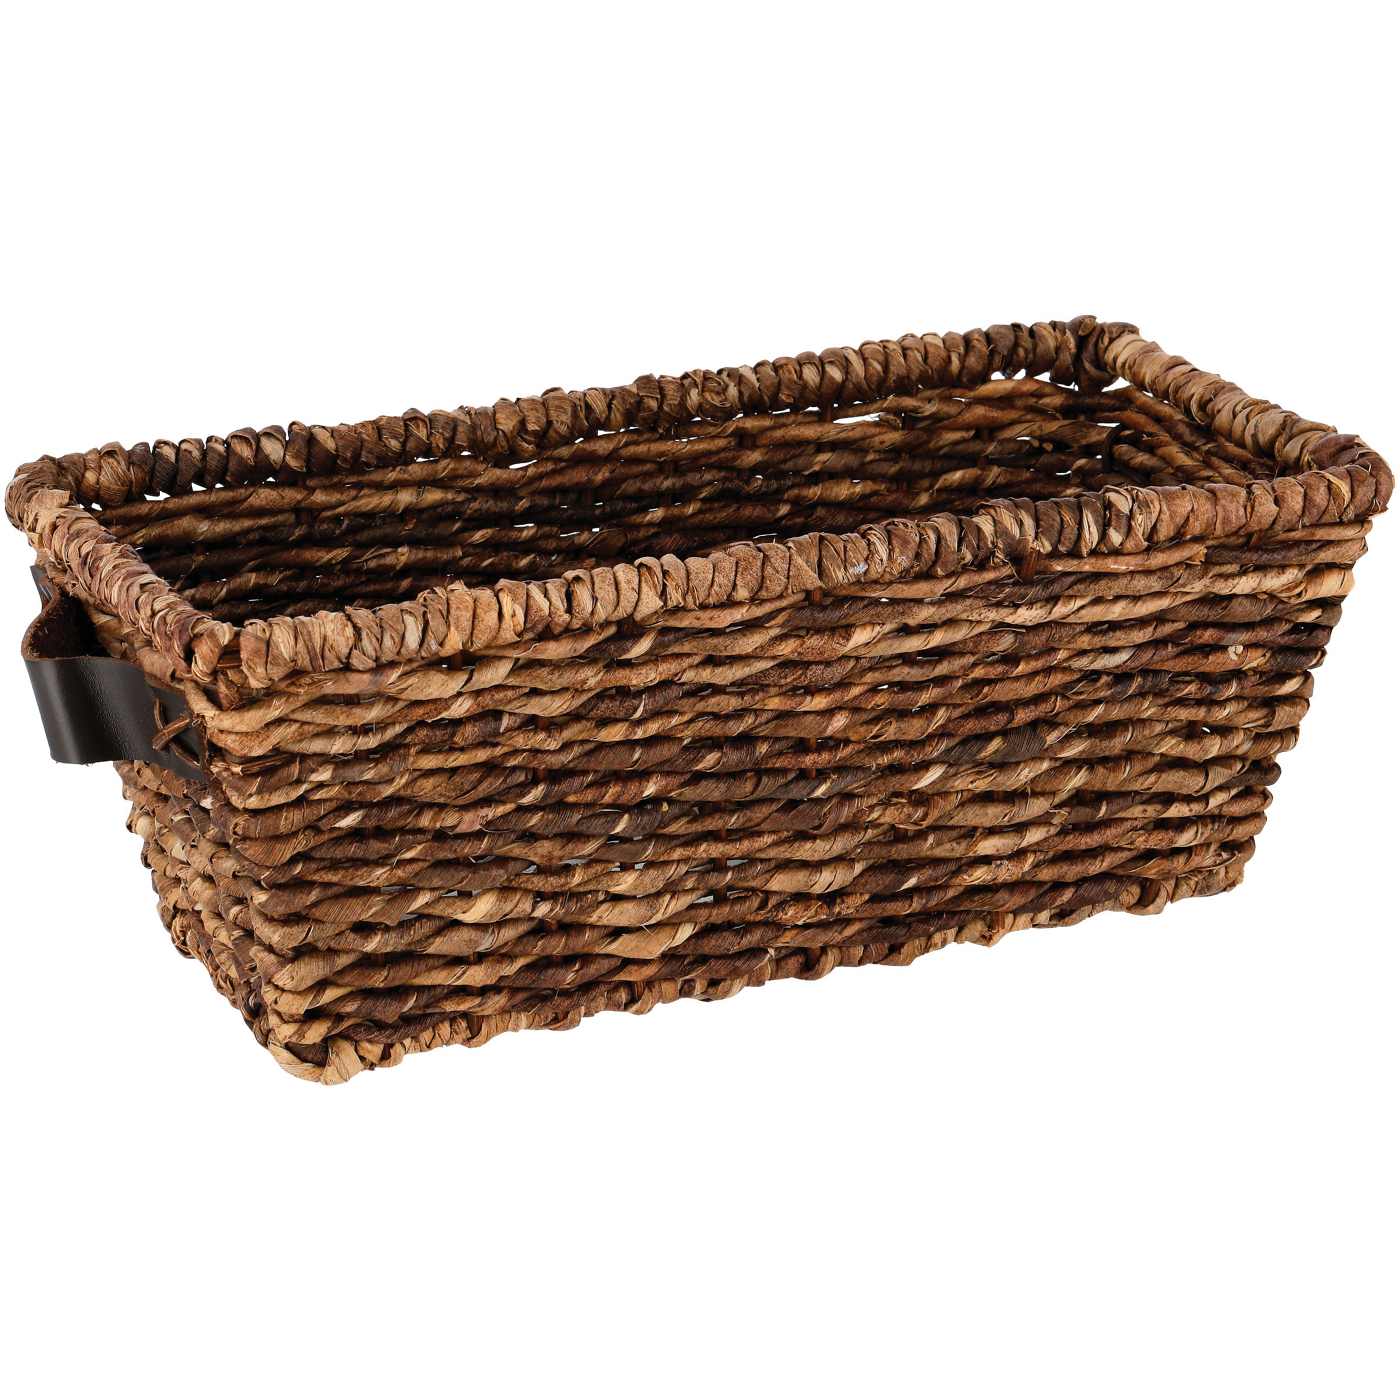 Haven + Key Small Rectangular Storage Basket with Leather Handles - Brown -  Shop Seasonal Decor at H-E-B